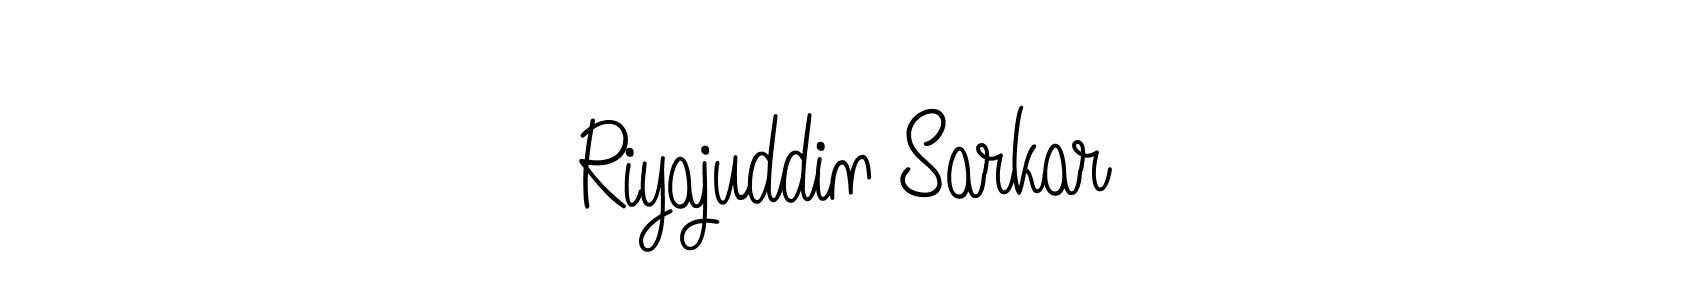 How to Draw Riyajuddin Sarkar signature style? Angelique-Rose-font-FFP is a latest design signature styles for name Riyajuddin Sarkar. Riyajuddin Sarkar signature style 5 images and pictures png